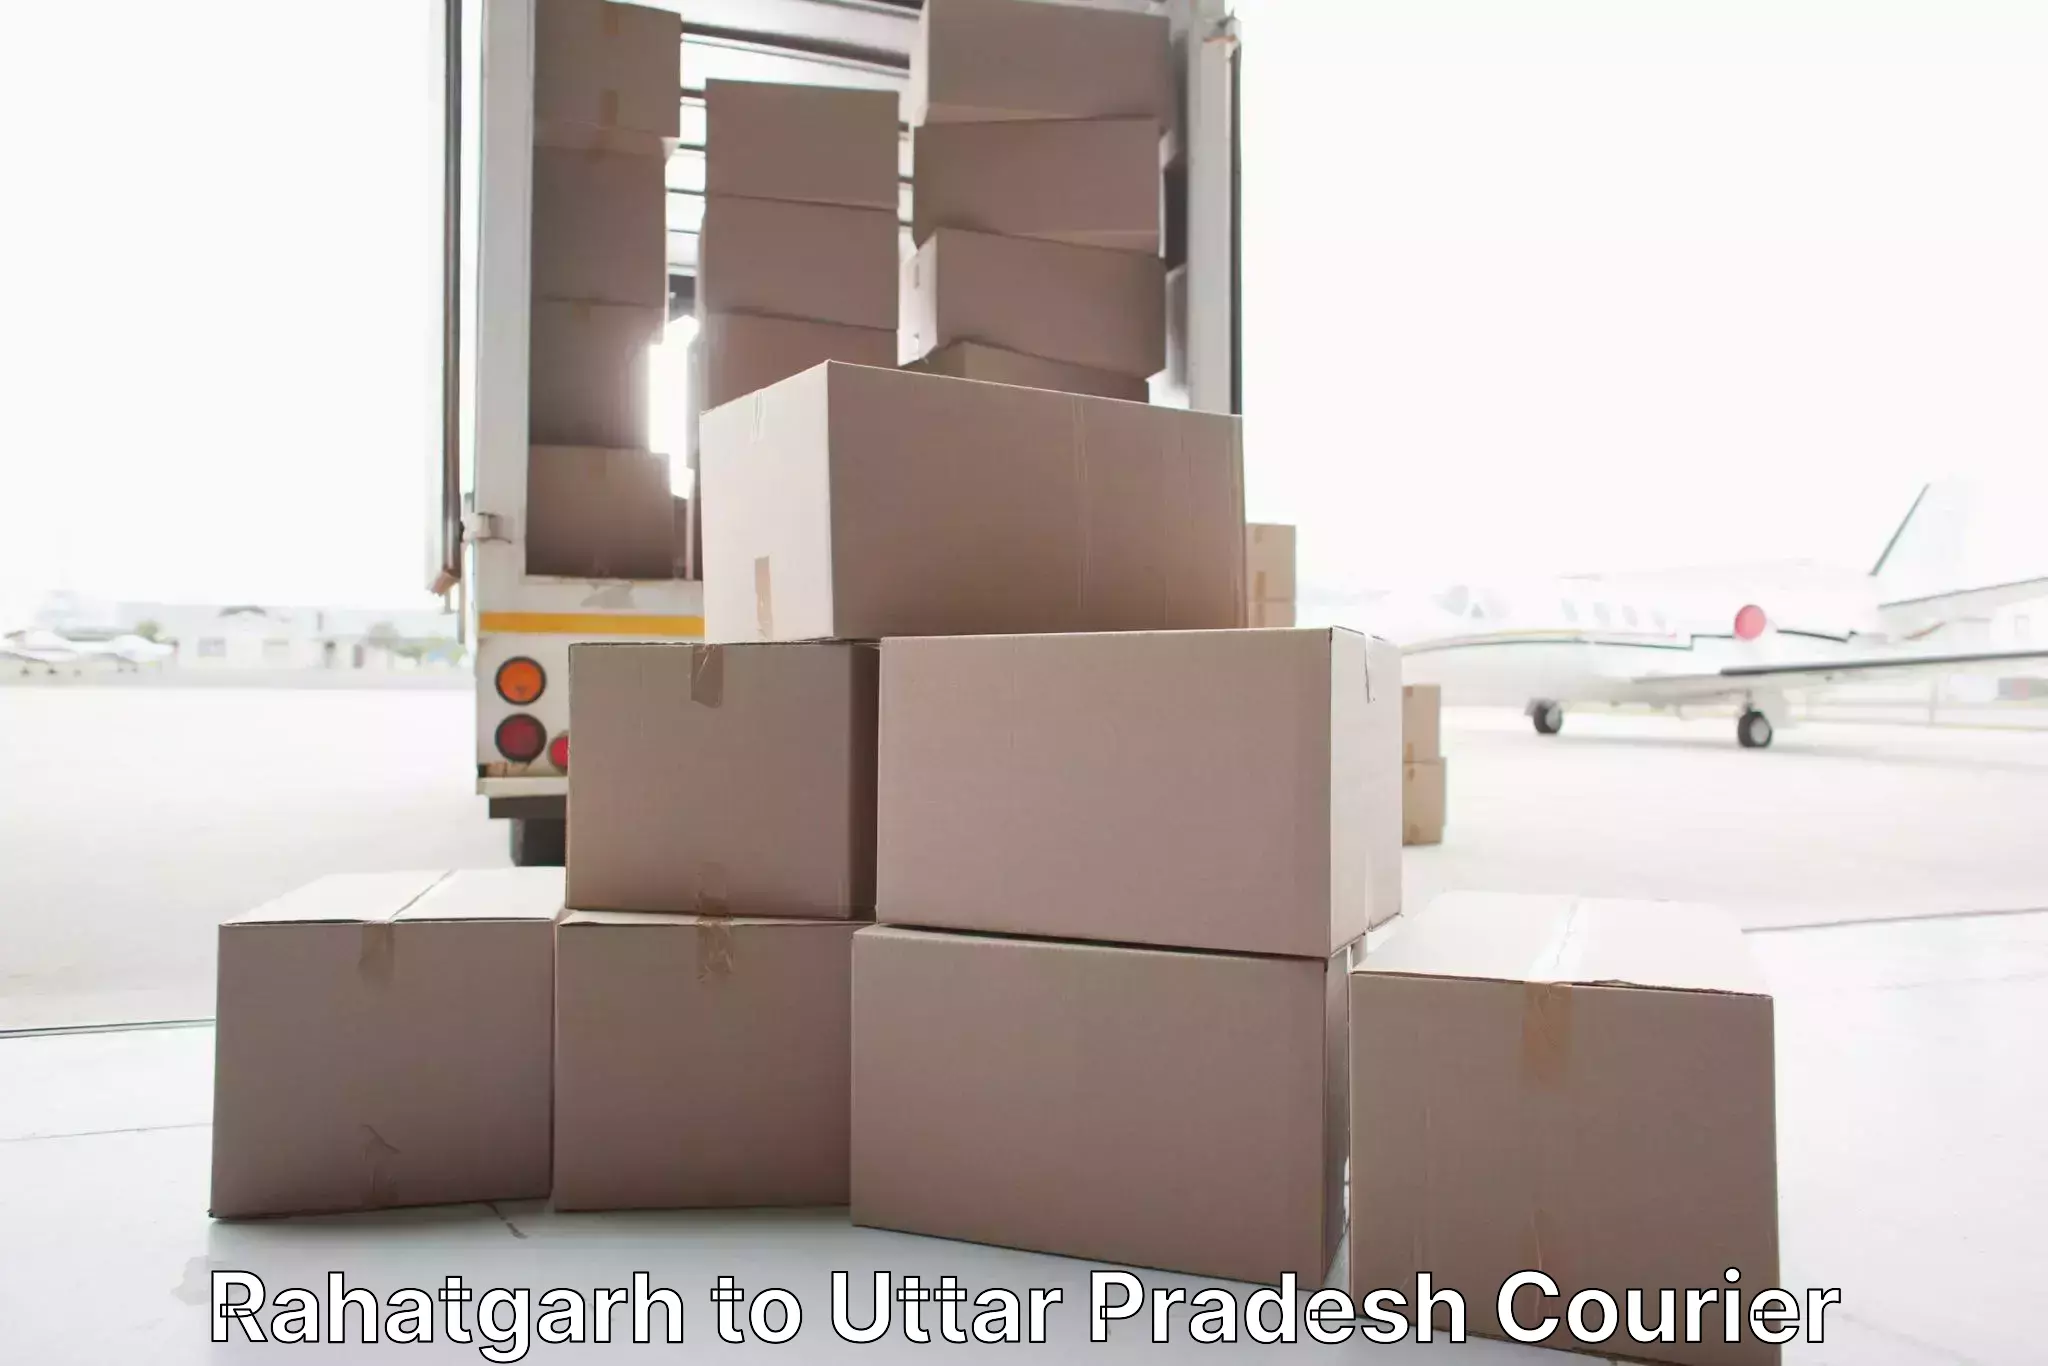 Seamless moving process Rahatgarh to Nizamabad Azamgarh